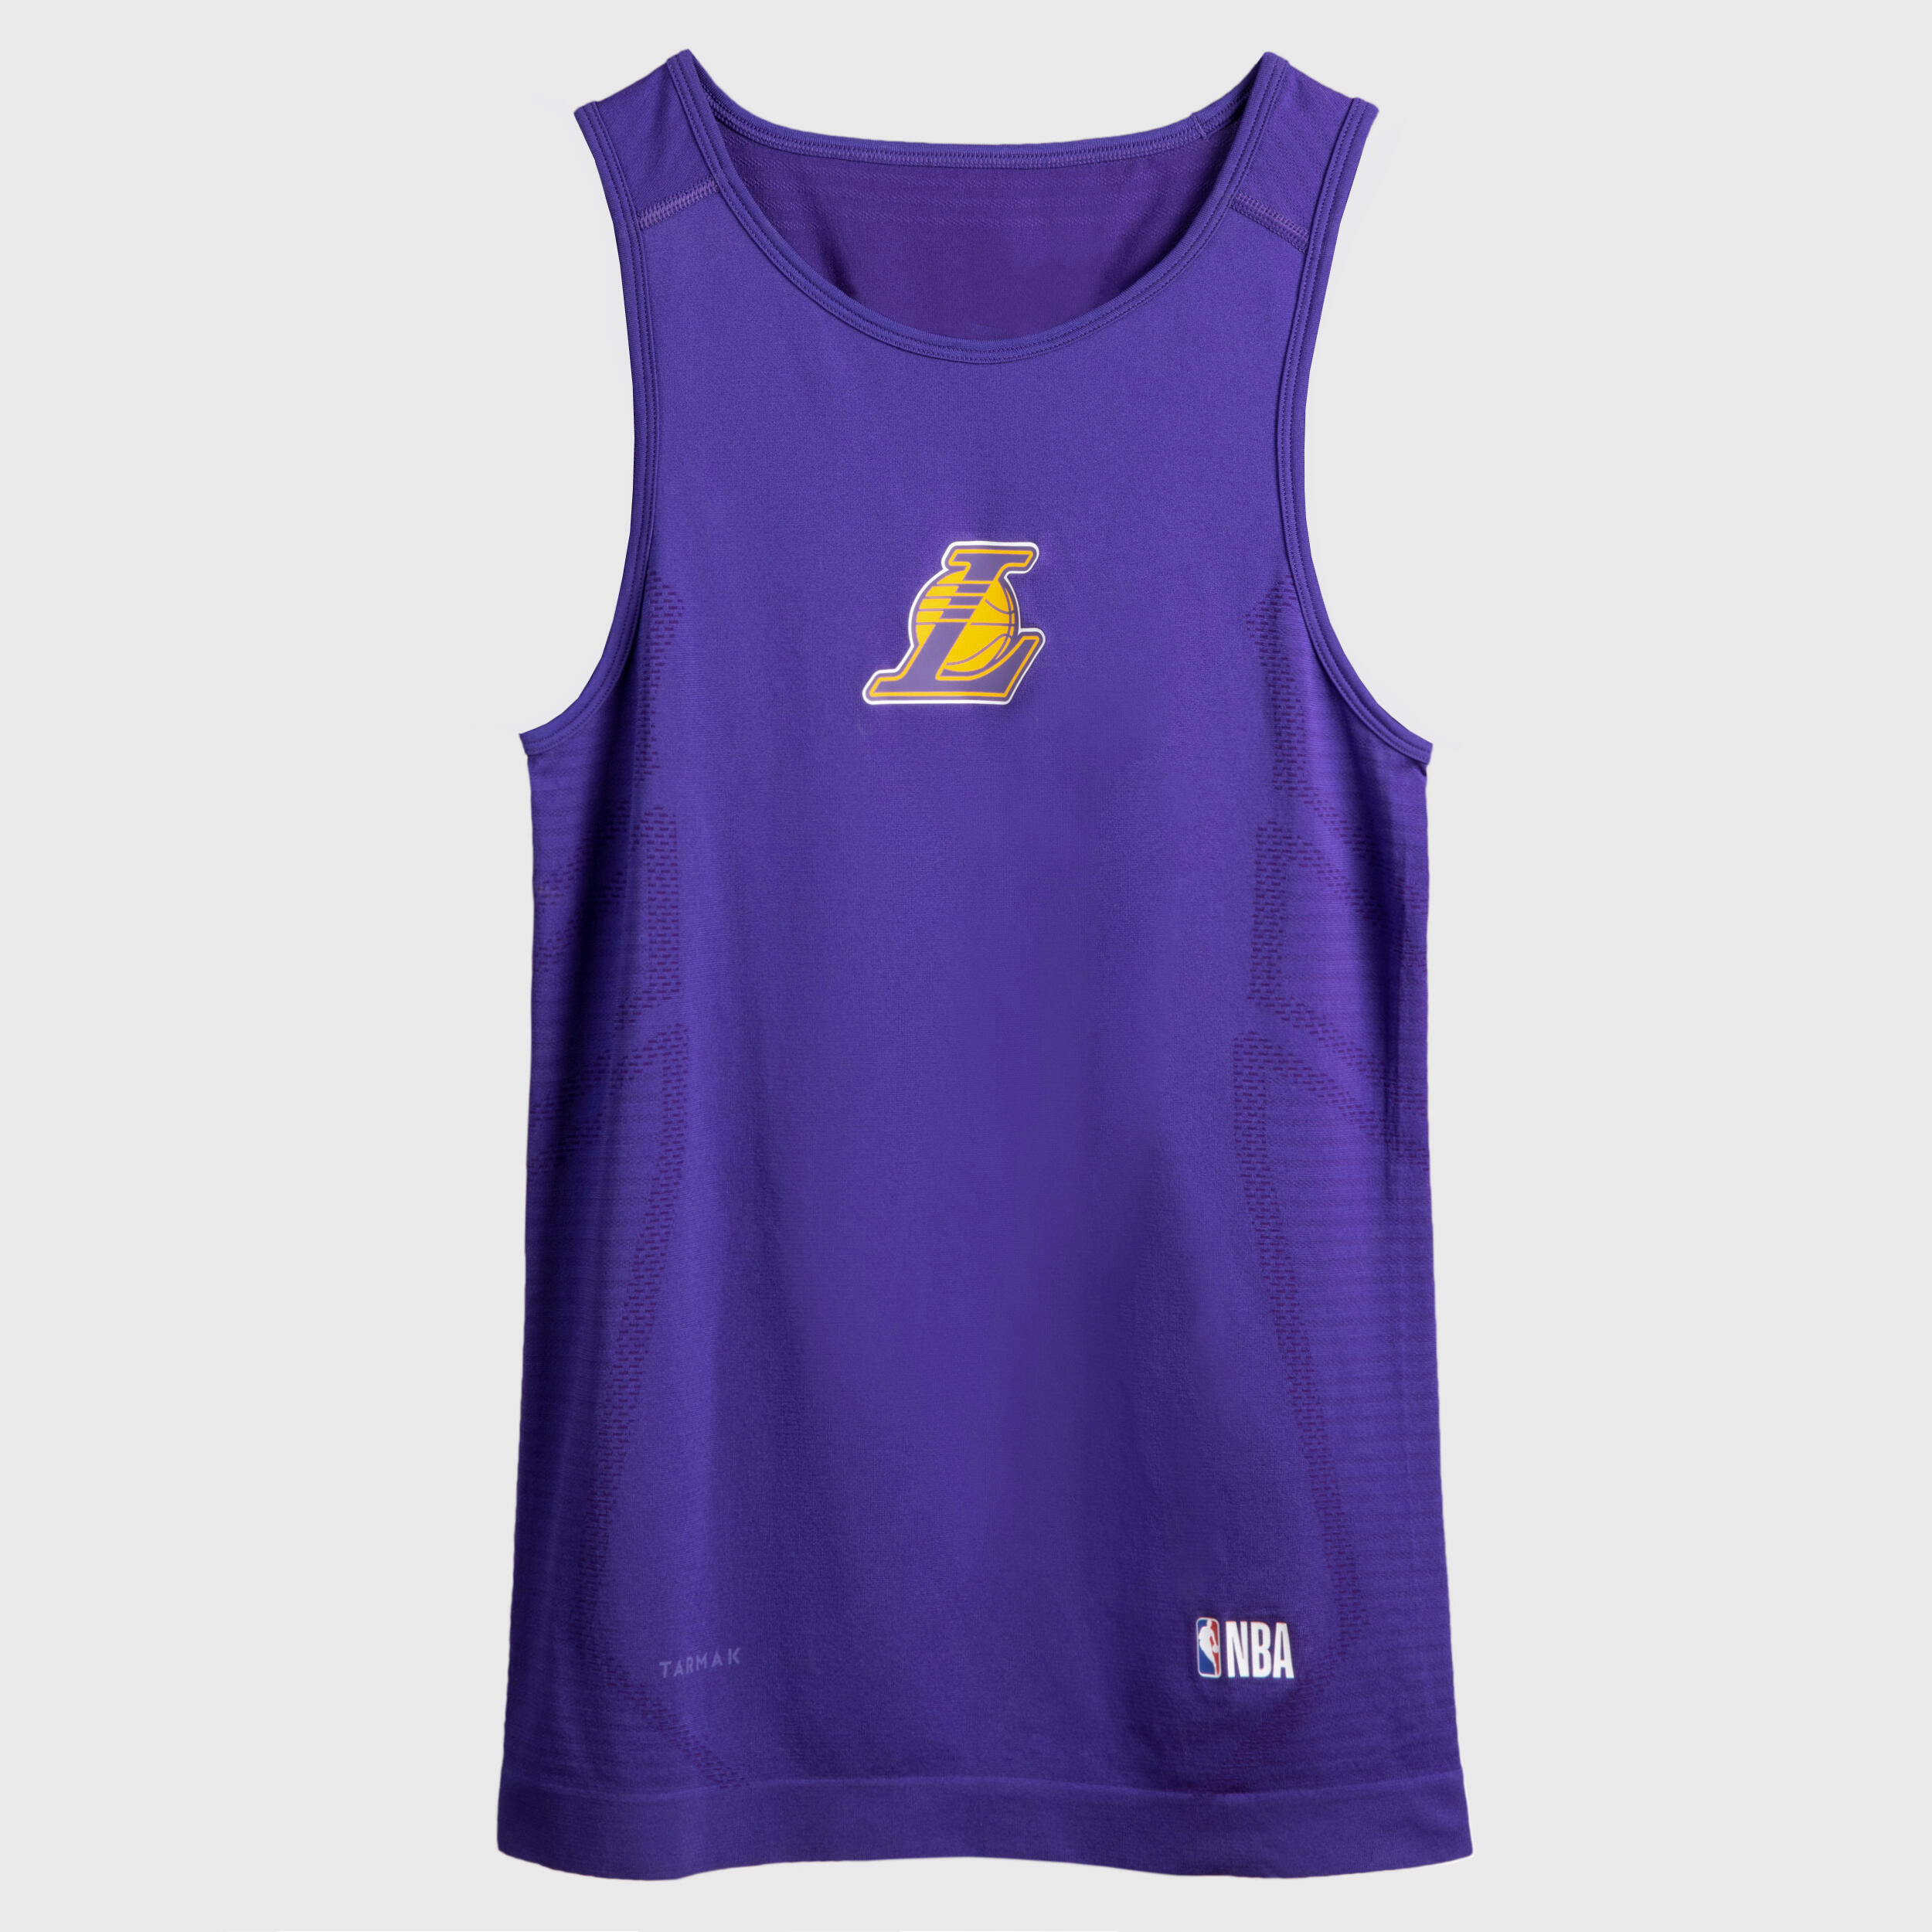 Men's Slim Fit Basketball Base Layer Jersey UT500 - NBA Los Angeles Lakers 2/9